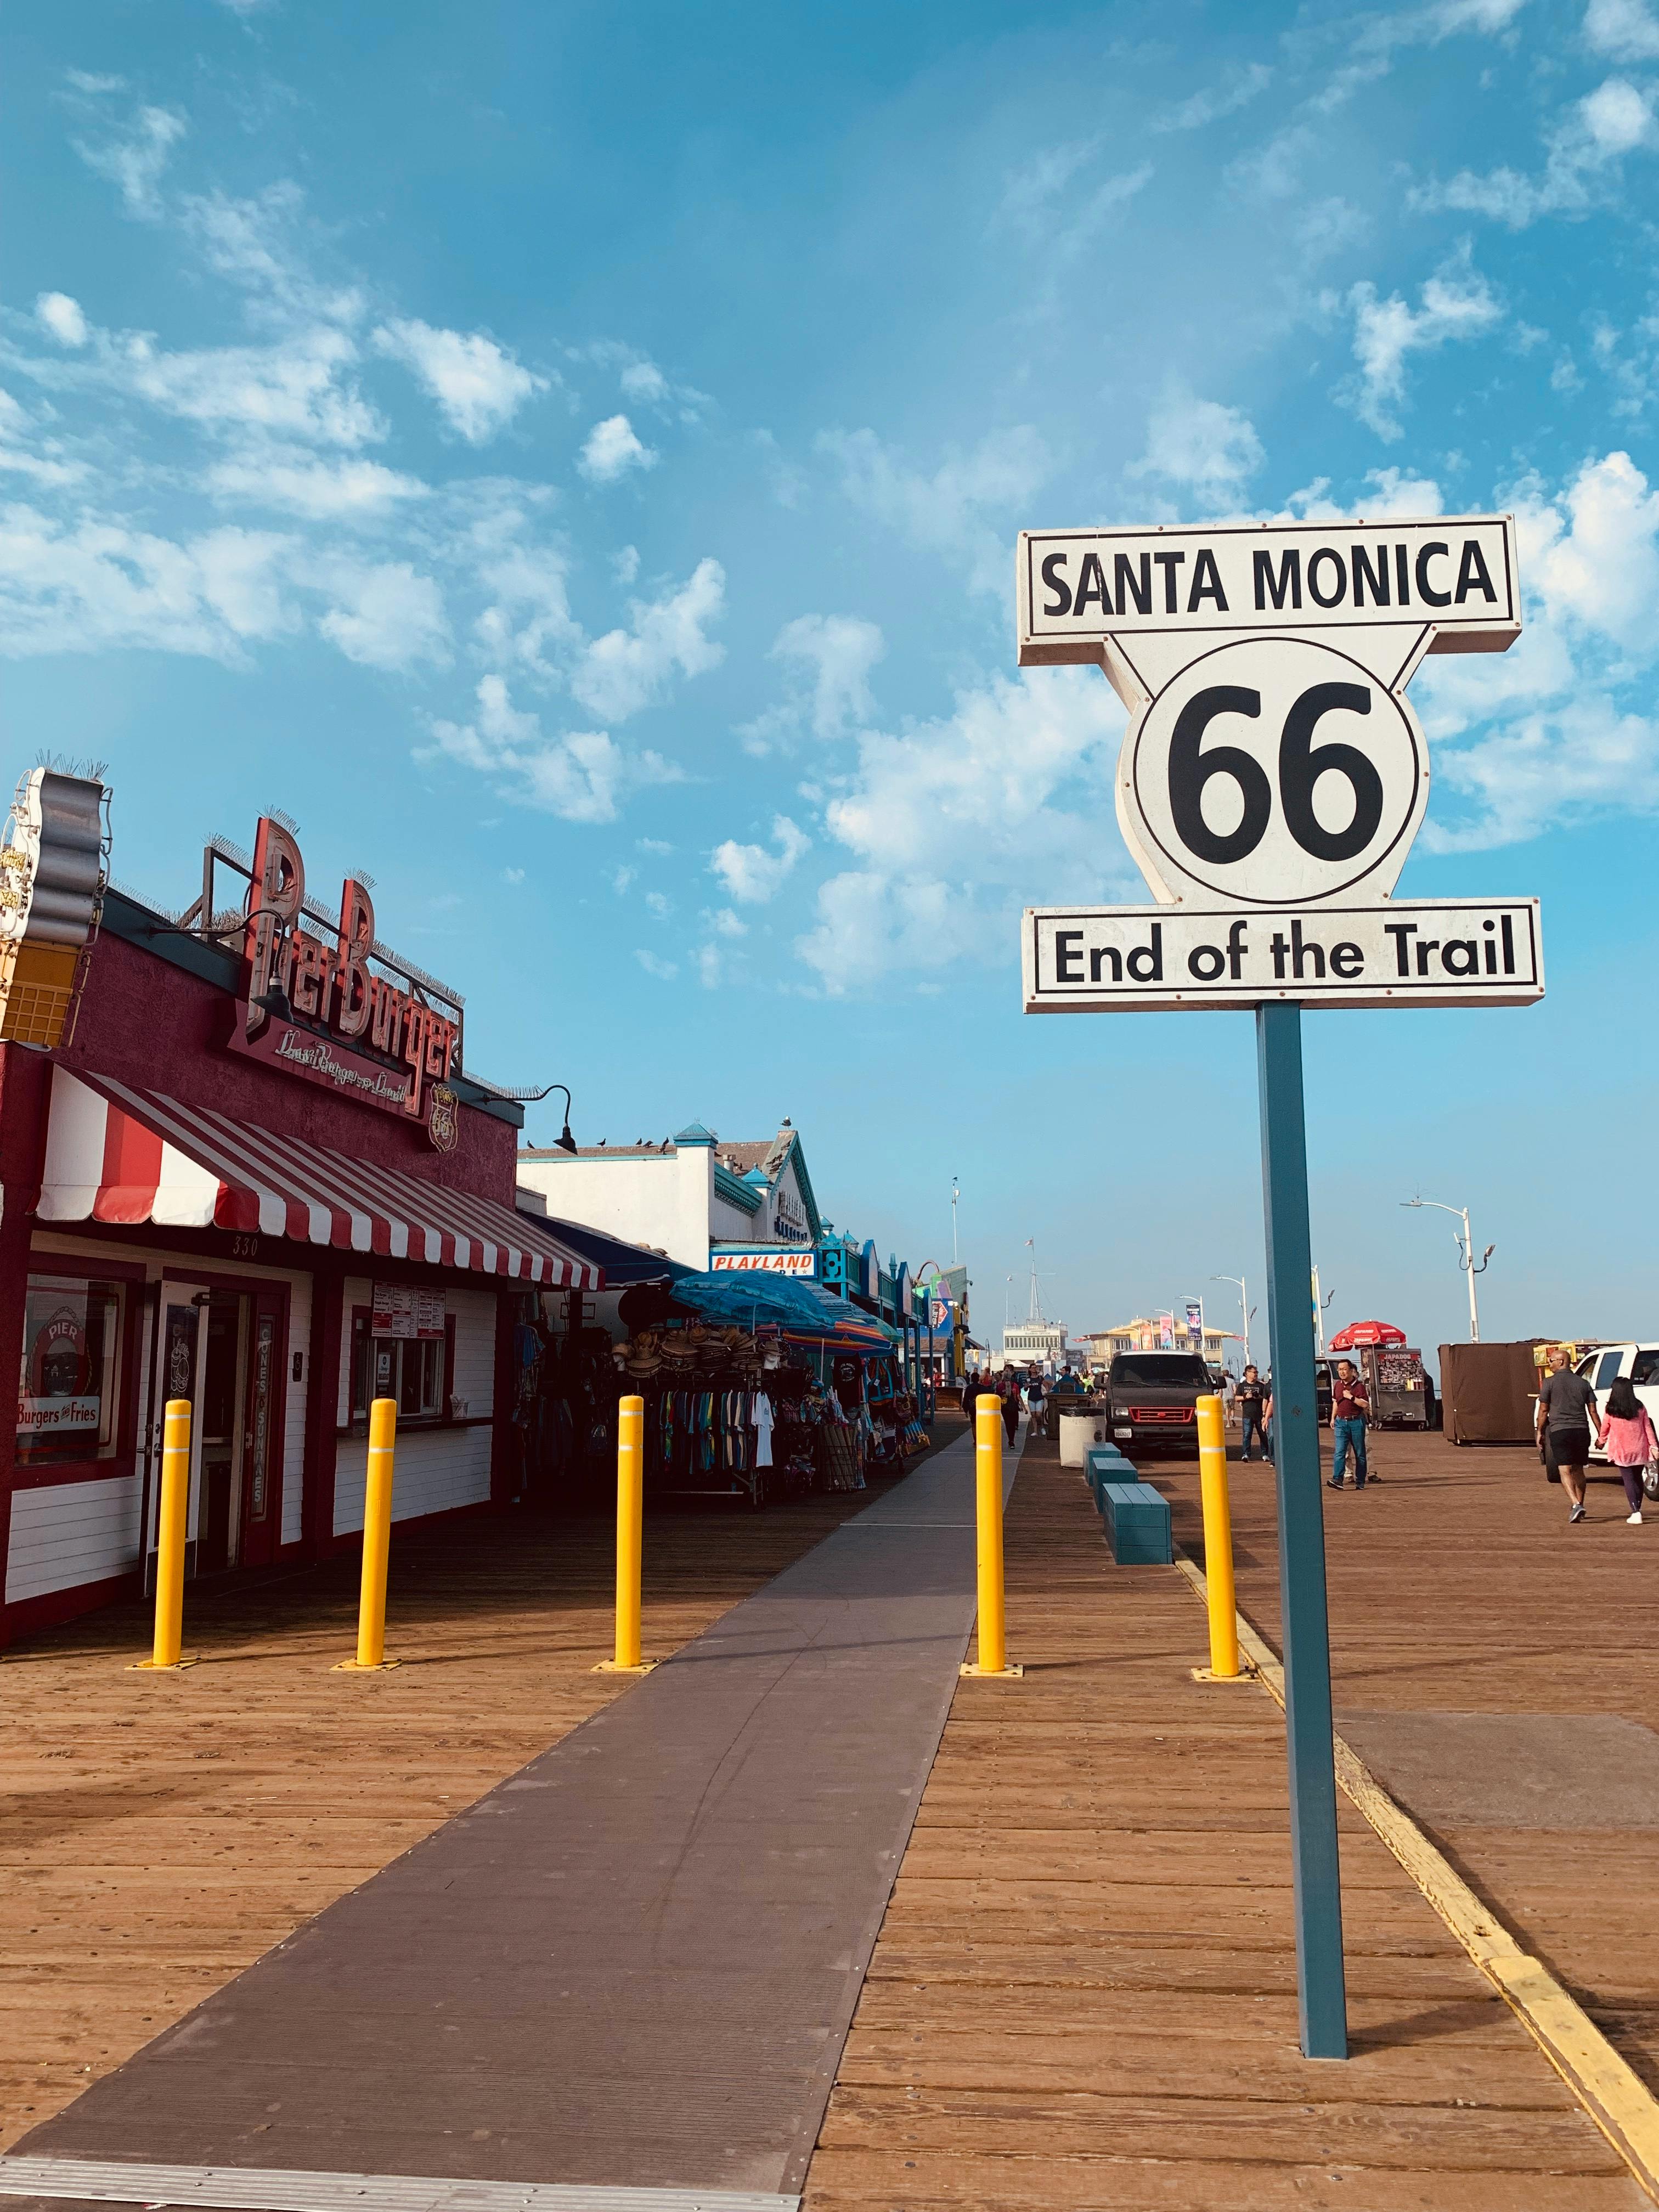 500 Santa Monica Pictures  Download Free Images on Unsplash